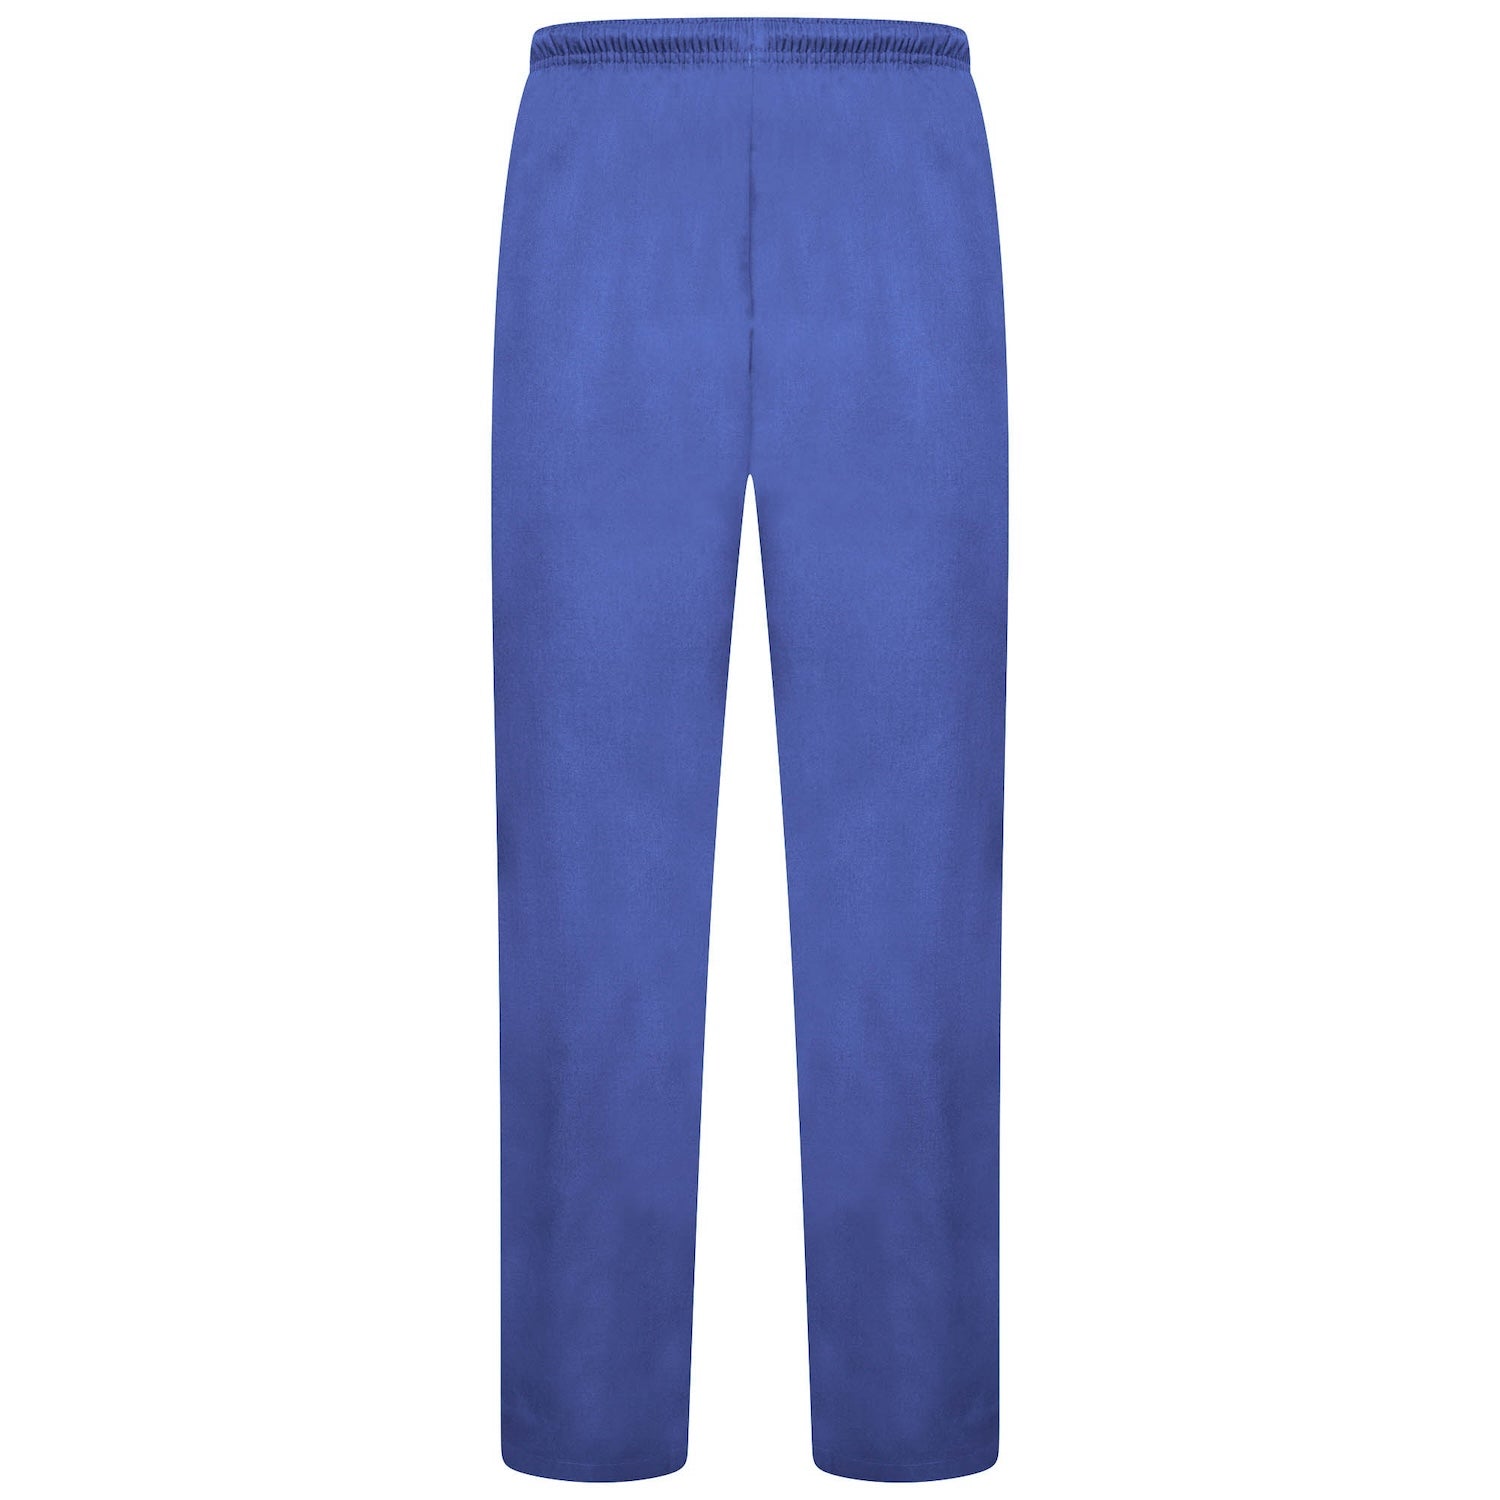 Unisex Smart Scrub Trousers | Hospital Blue | 33" Tall